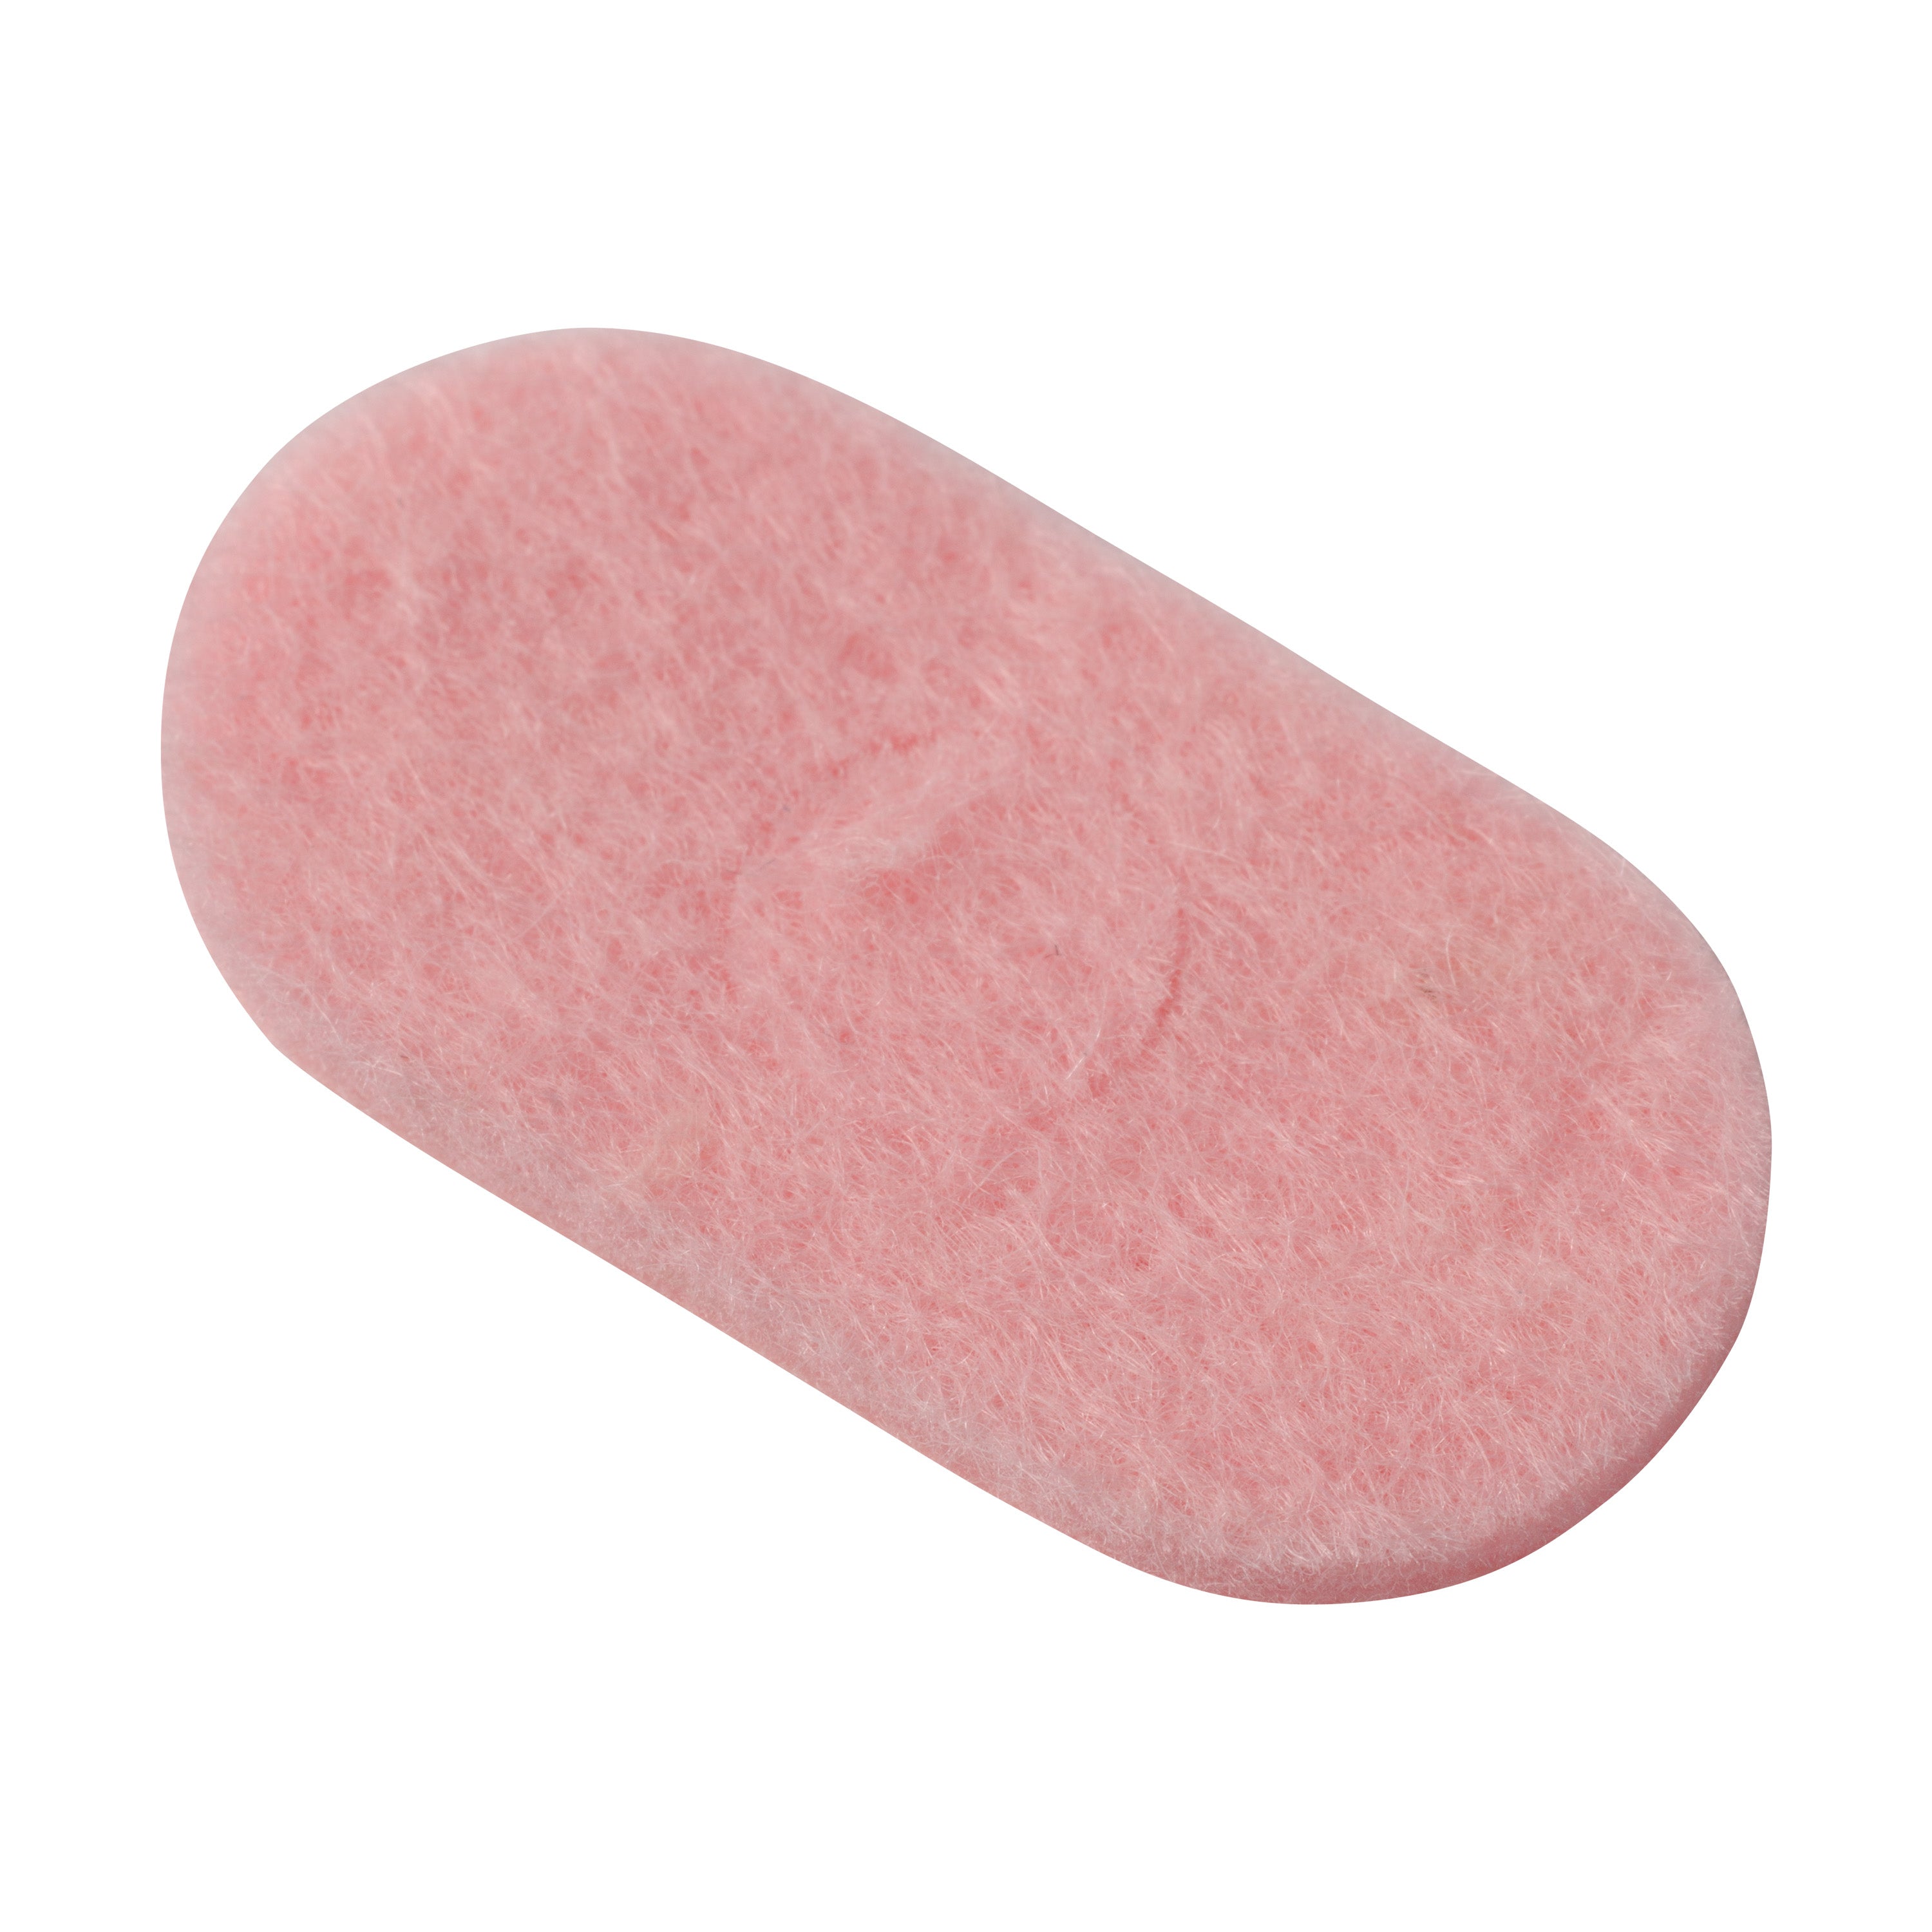 Stein's 1/8" Pink Adhesive Felt C-3 Corn Pad, 9/pk AM-765-1041-0009